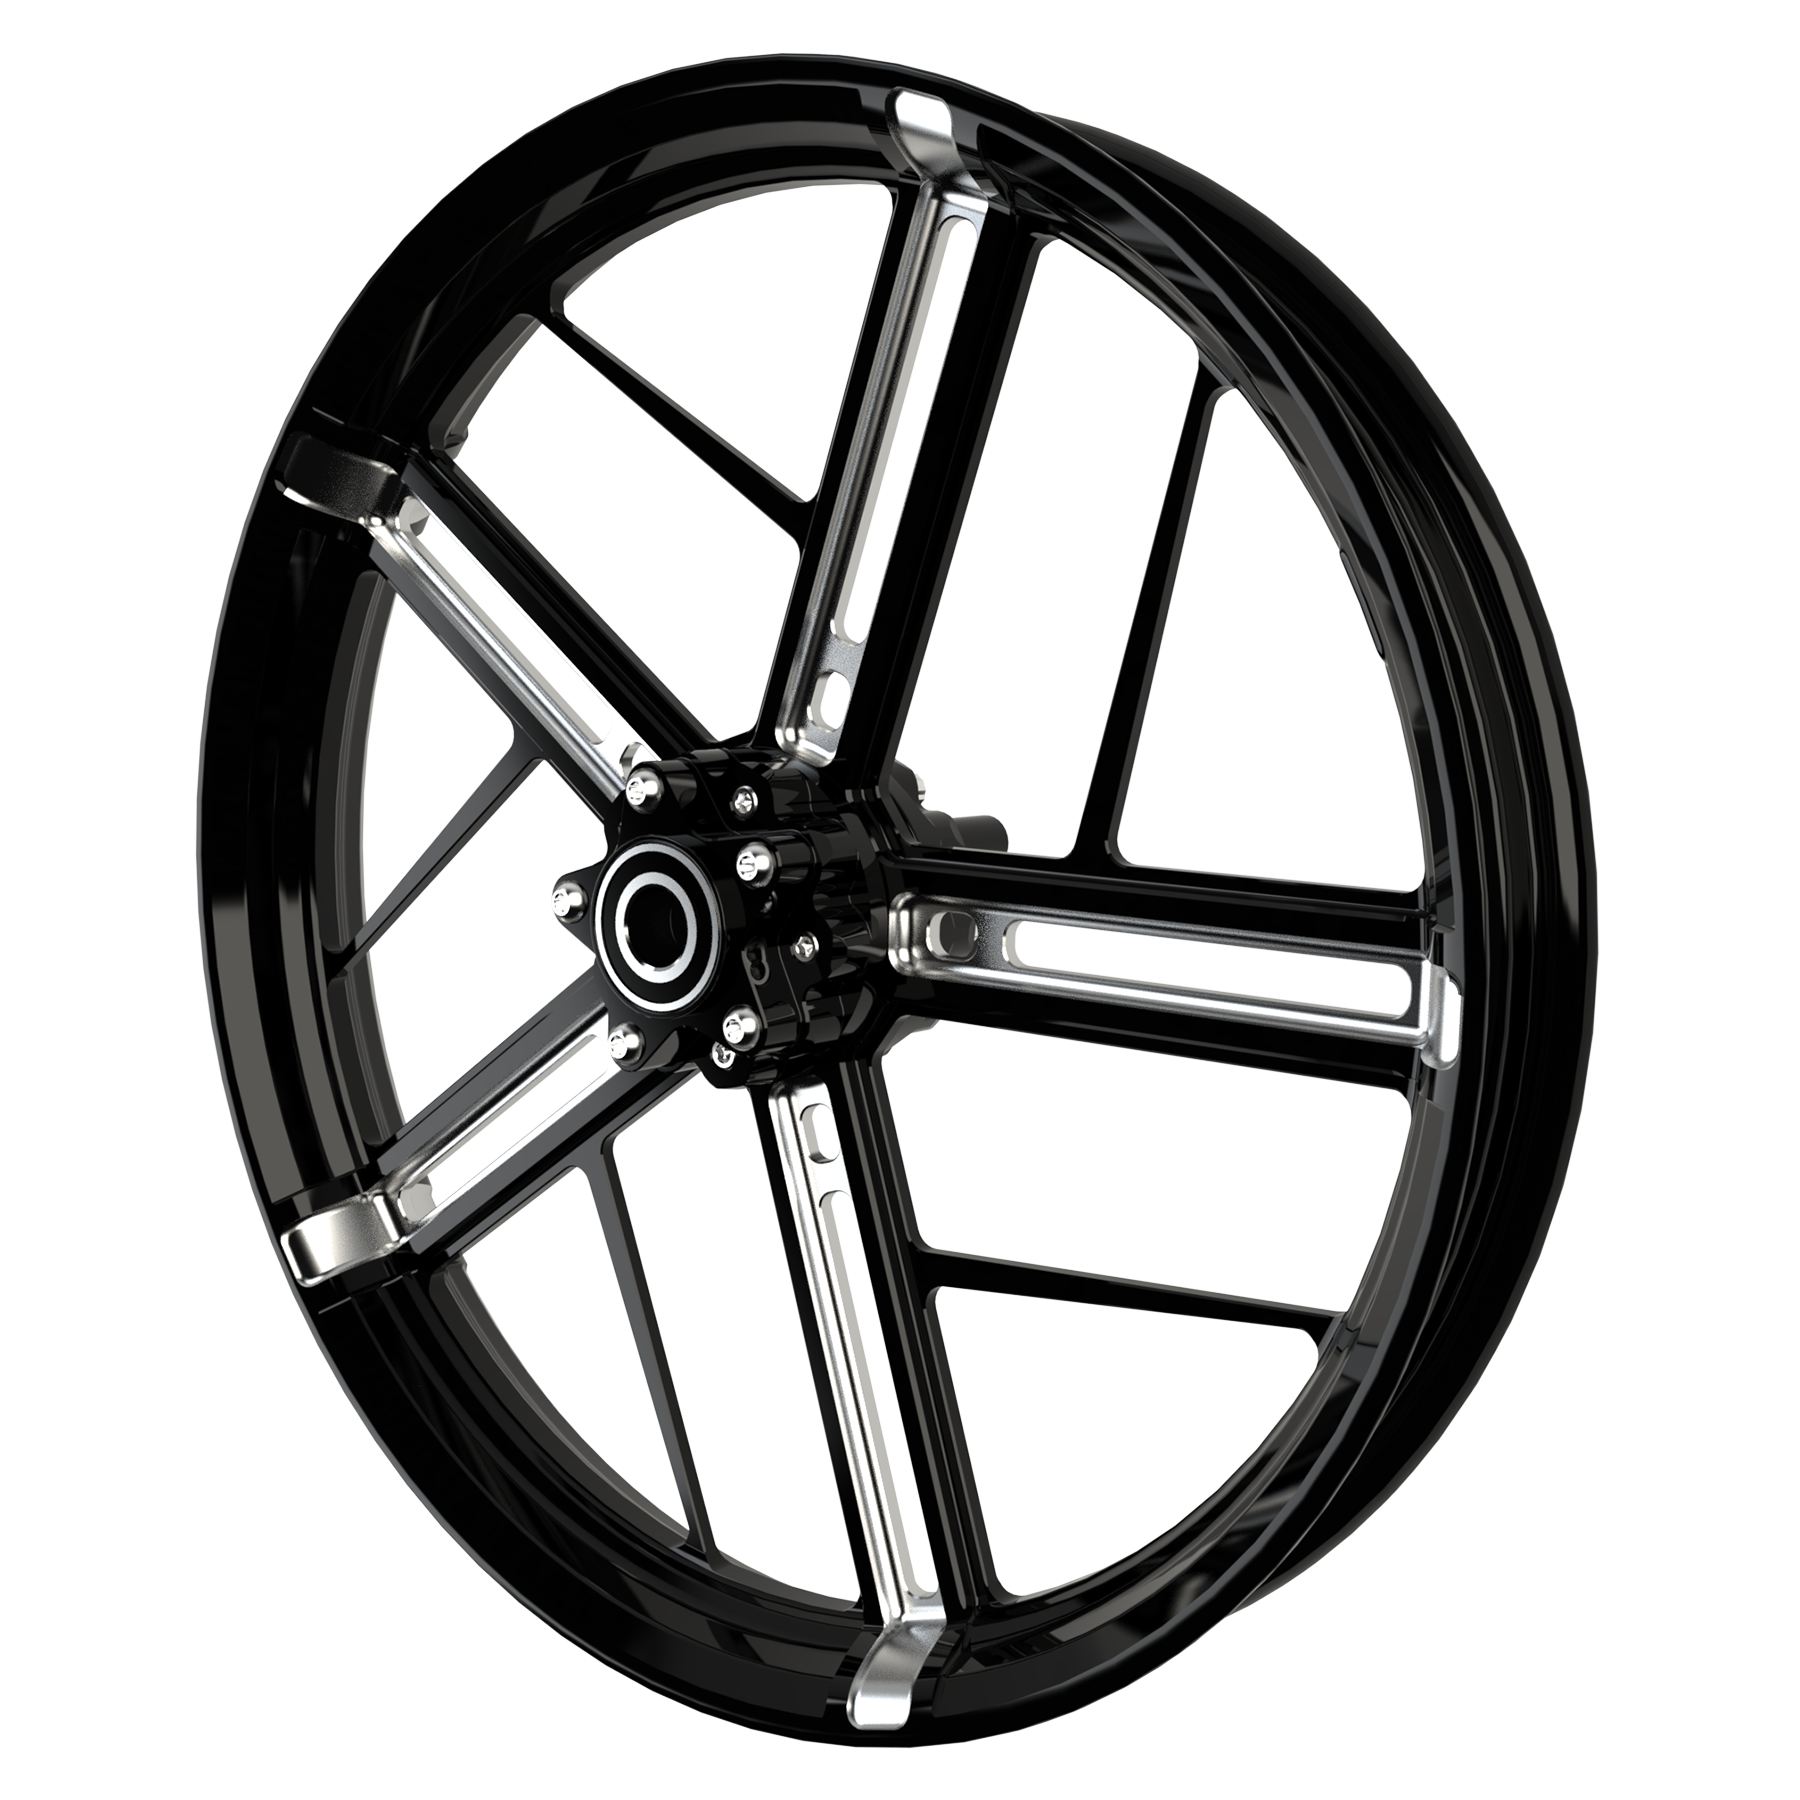 PS-1 custom motorycycle wheel in black contrasting cut